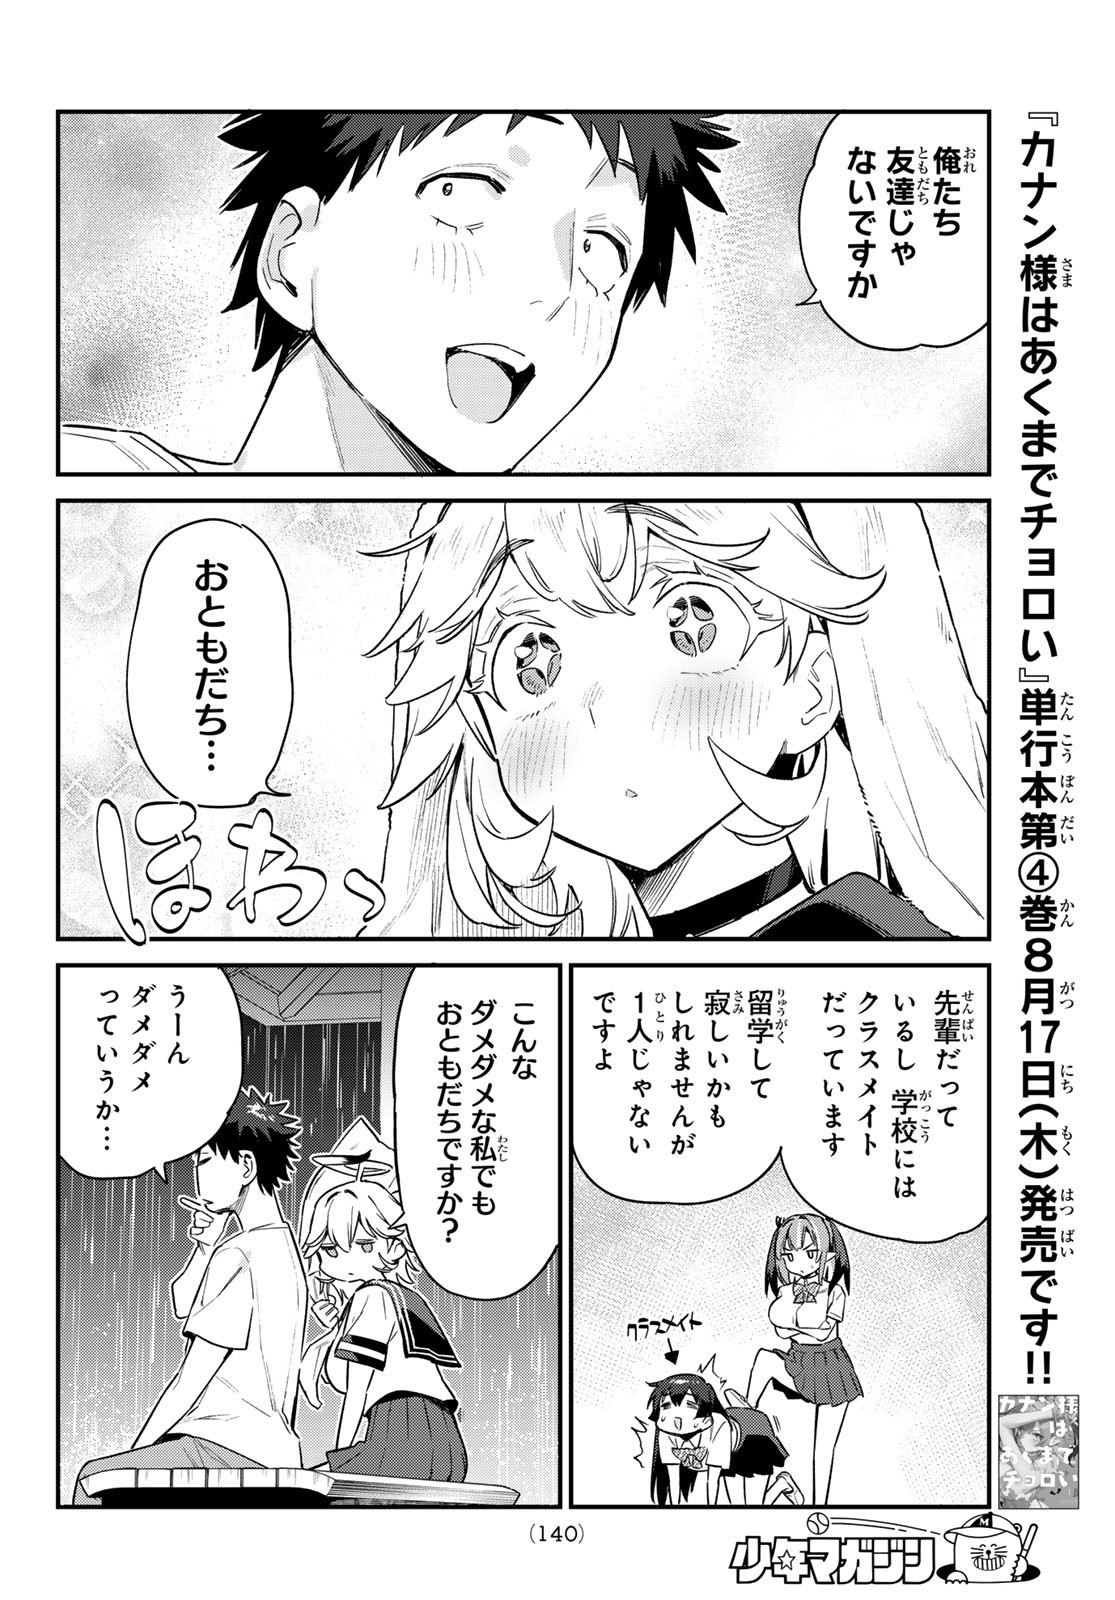 Kanan-sama wa Akumade Choroi - Chapter 061 - Page 4